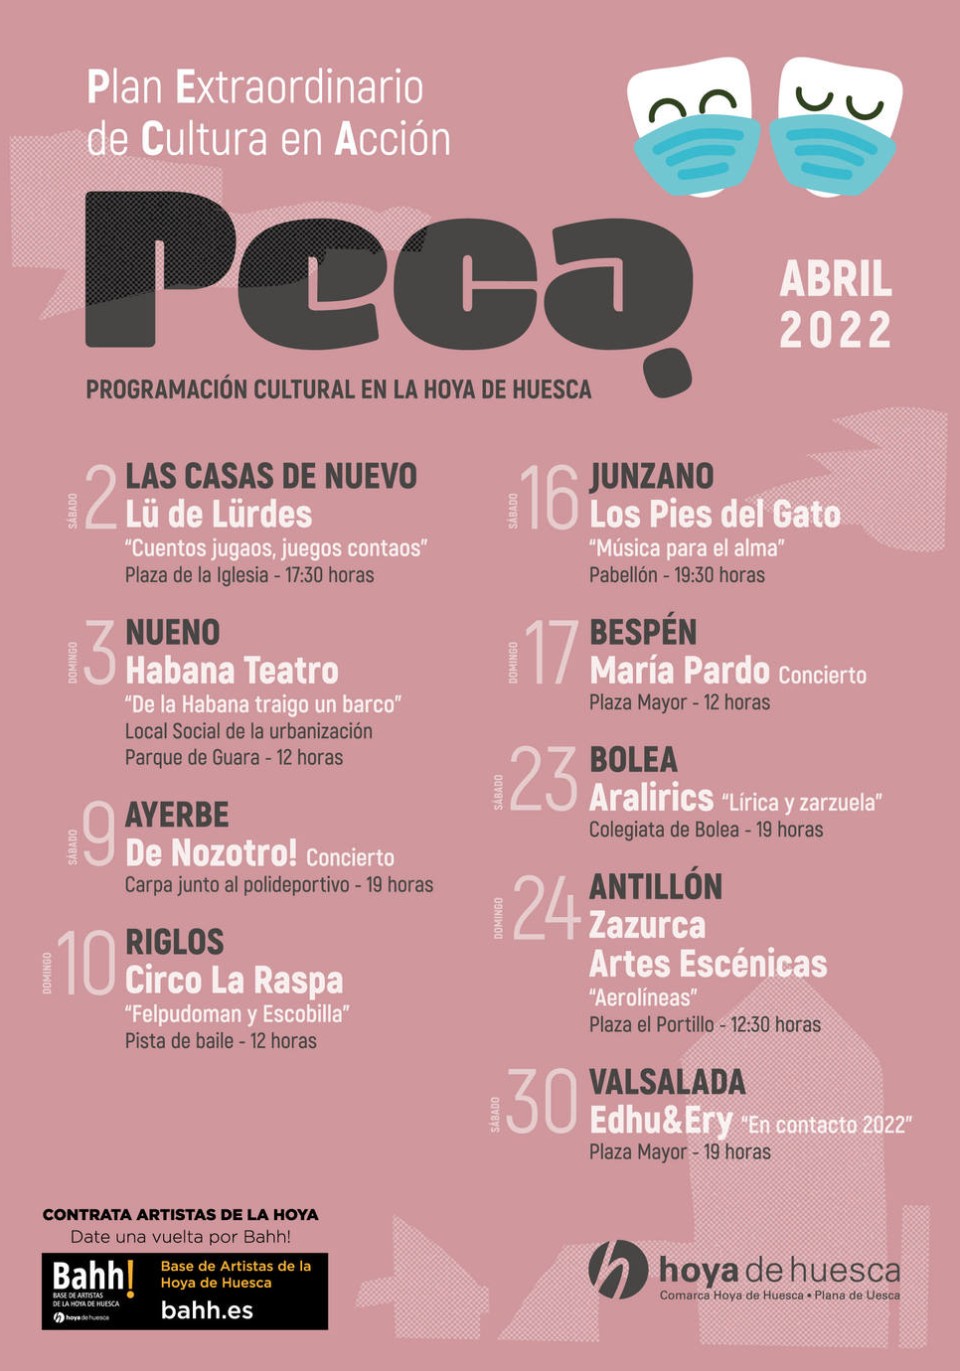 Imagen PECA de la Hoya de Huesca